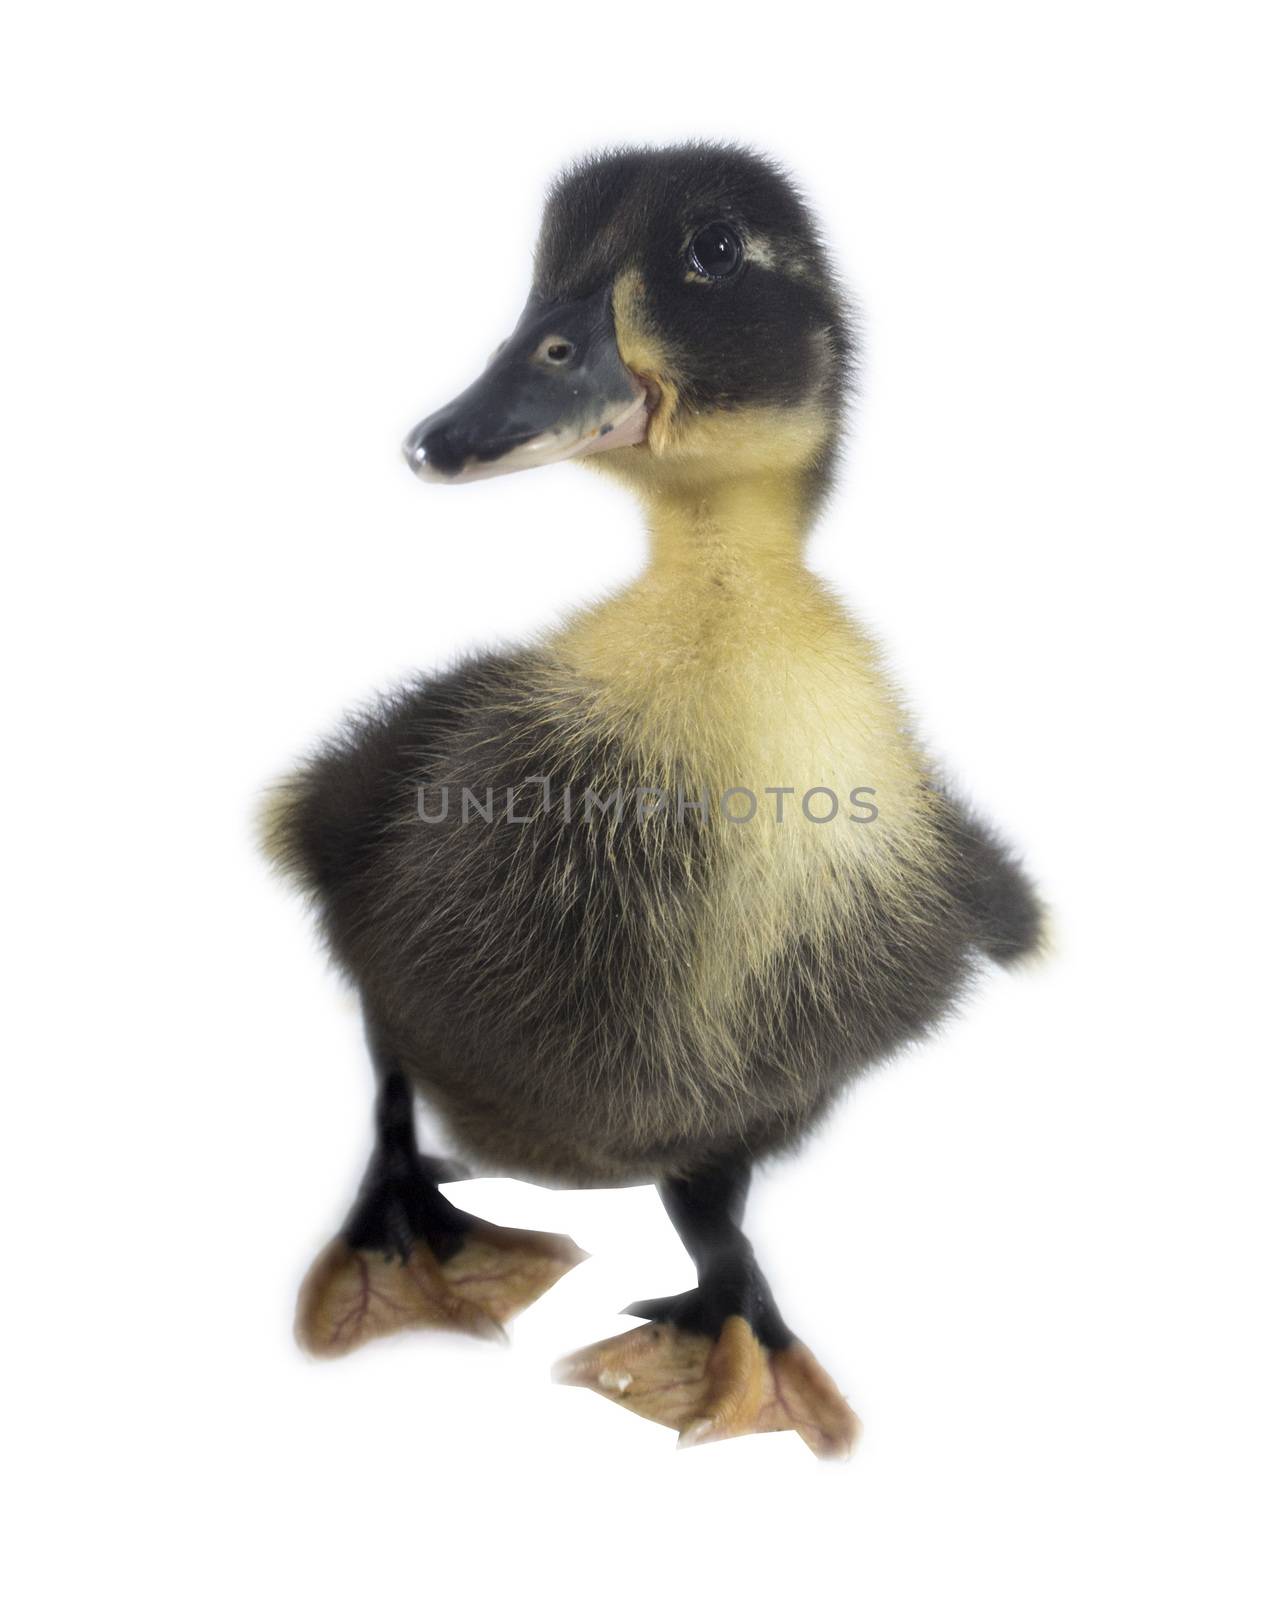 Funny black Duckling by designsstock